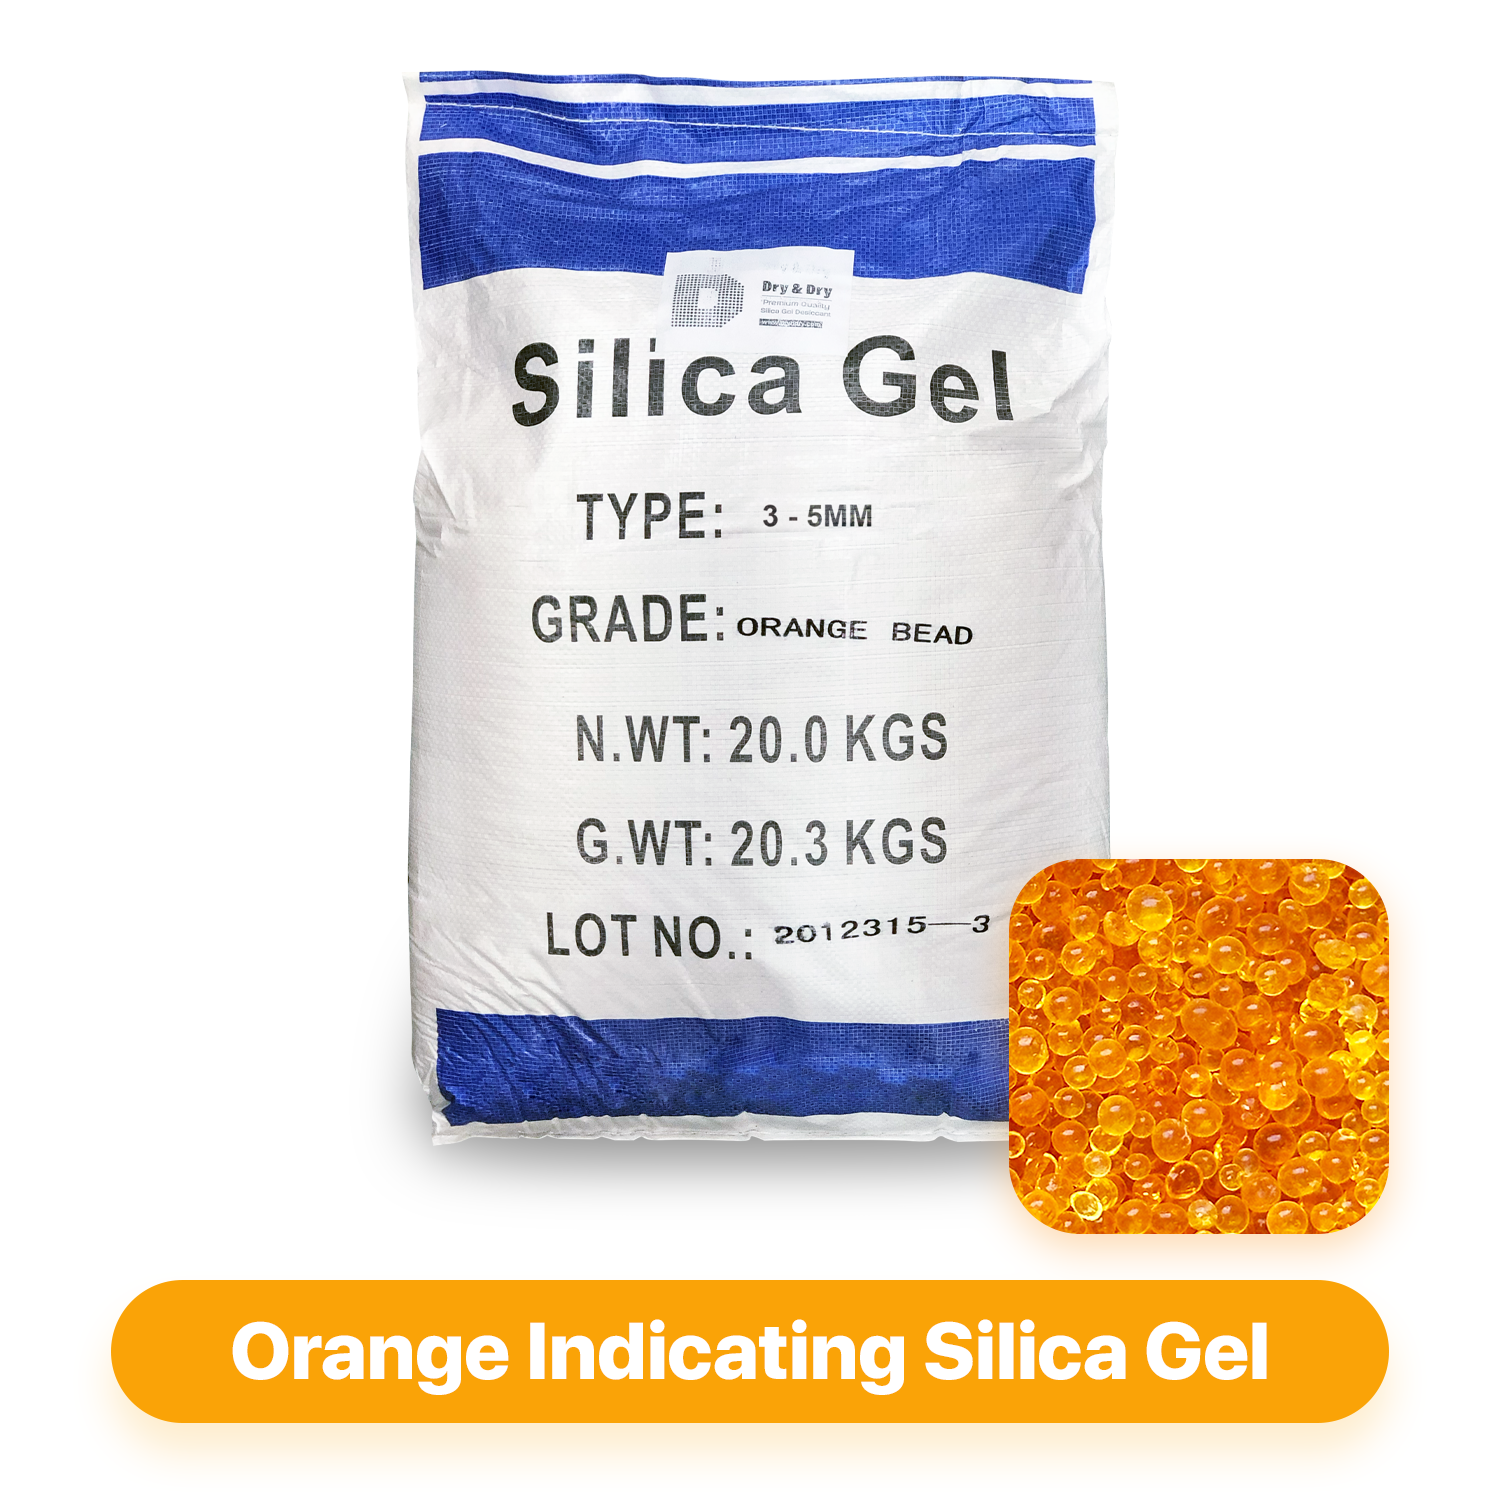 Dry & Dry [1.2-5 lbs] Premium Orange Indicating Silica Gel 1.2 lbs